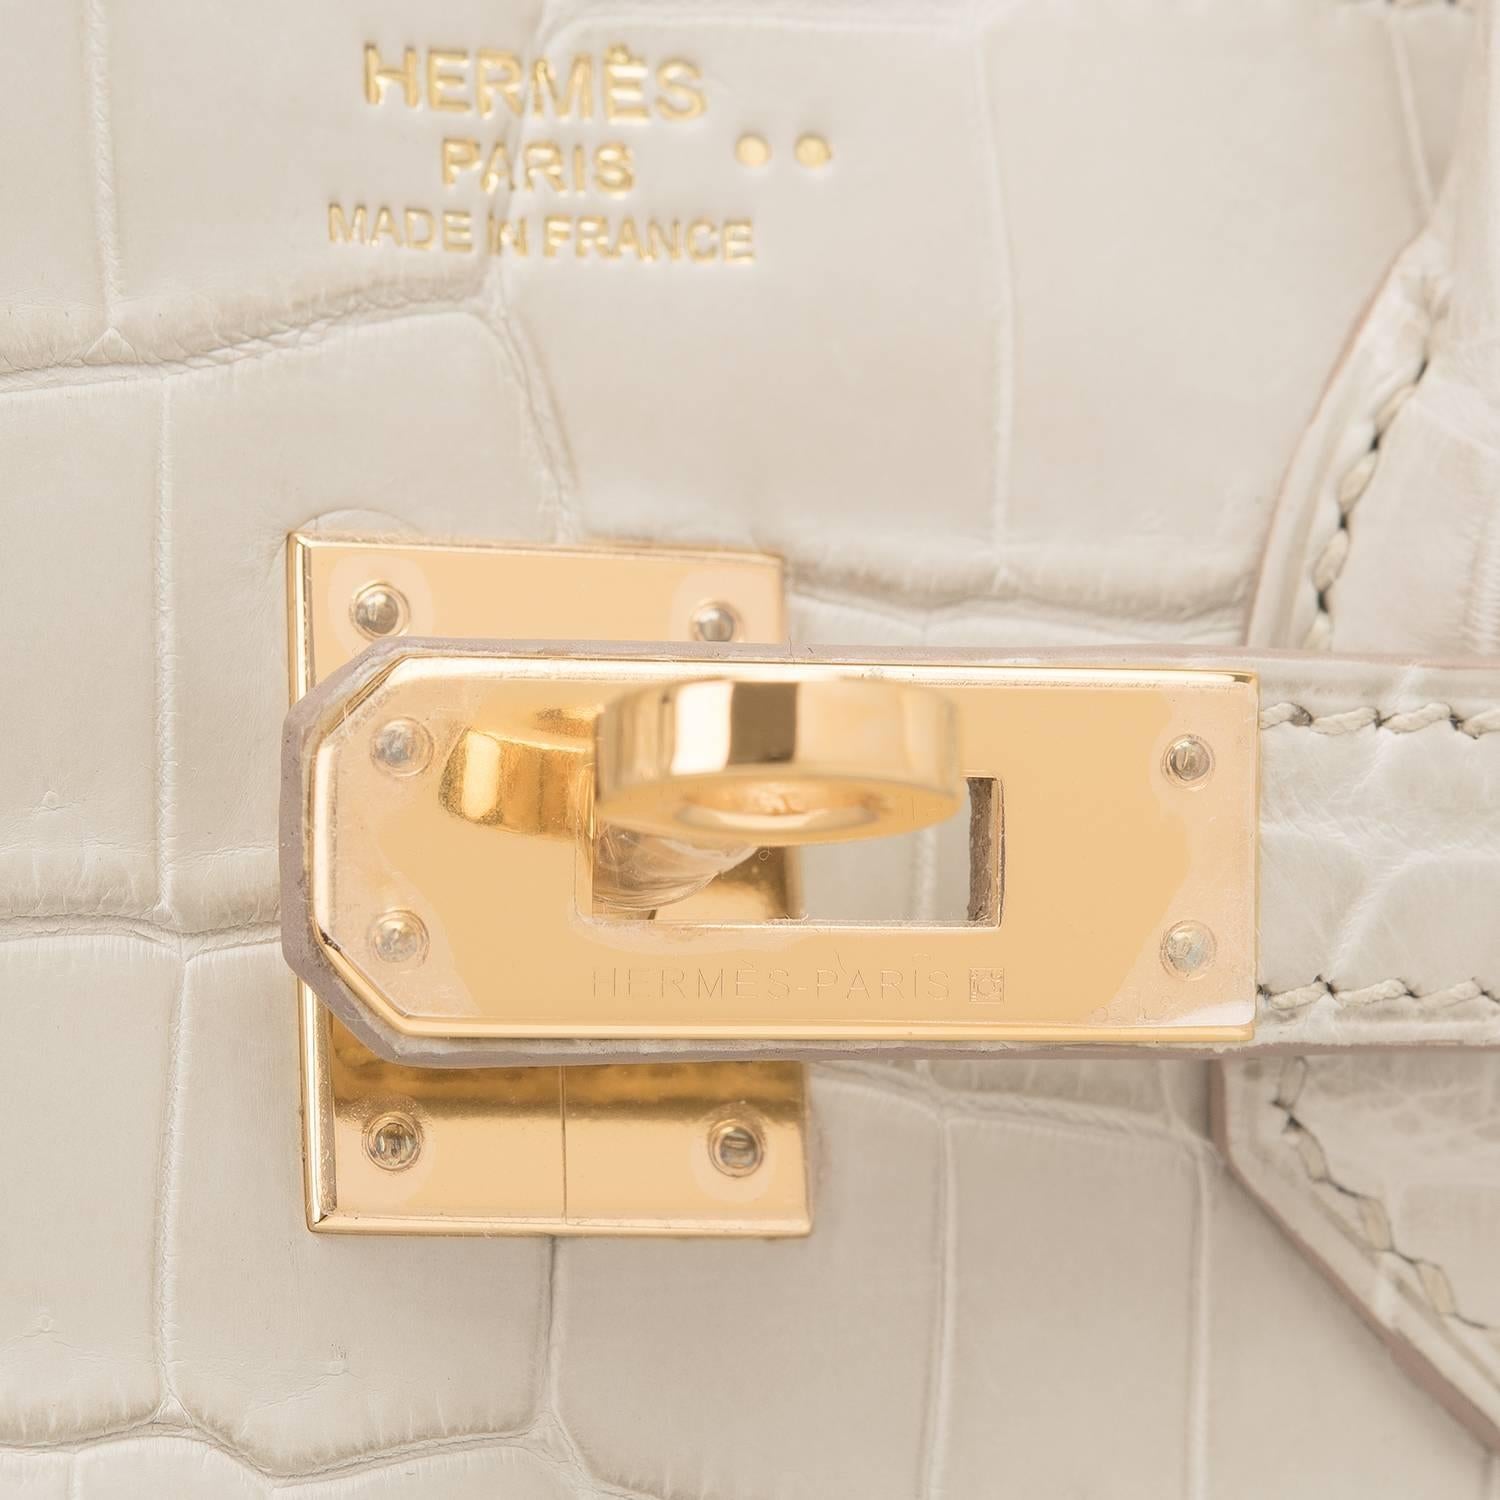 Hermes Beton Matte Nilo Crocodile Birkin 25cm Gold Hardware In New Condition For Sale In New York, NY